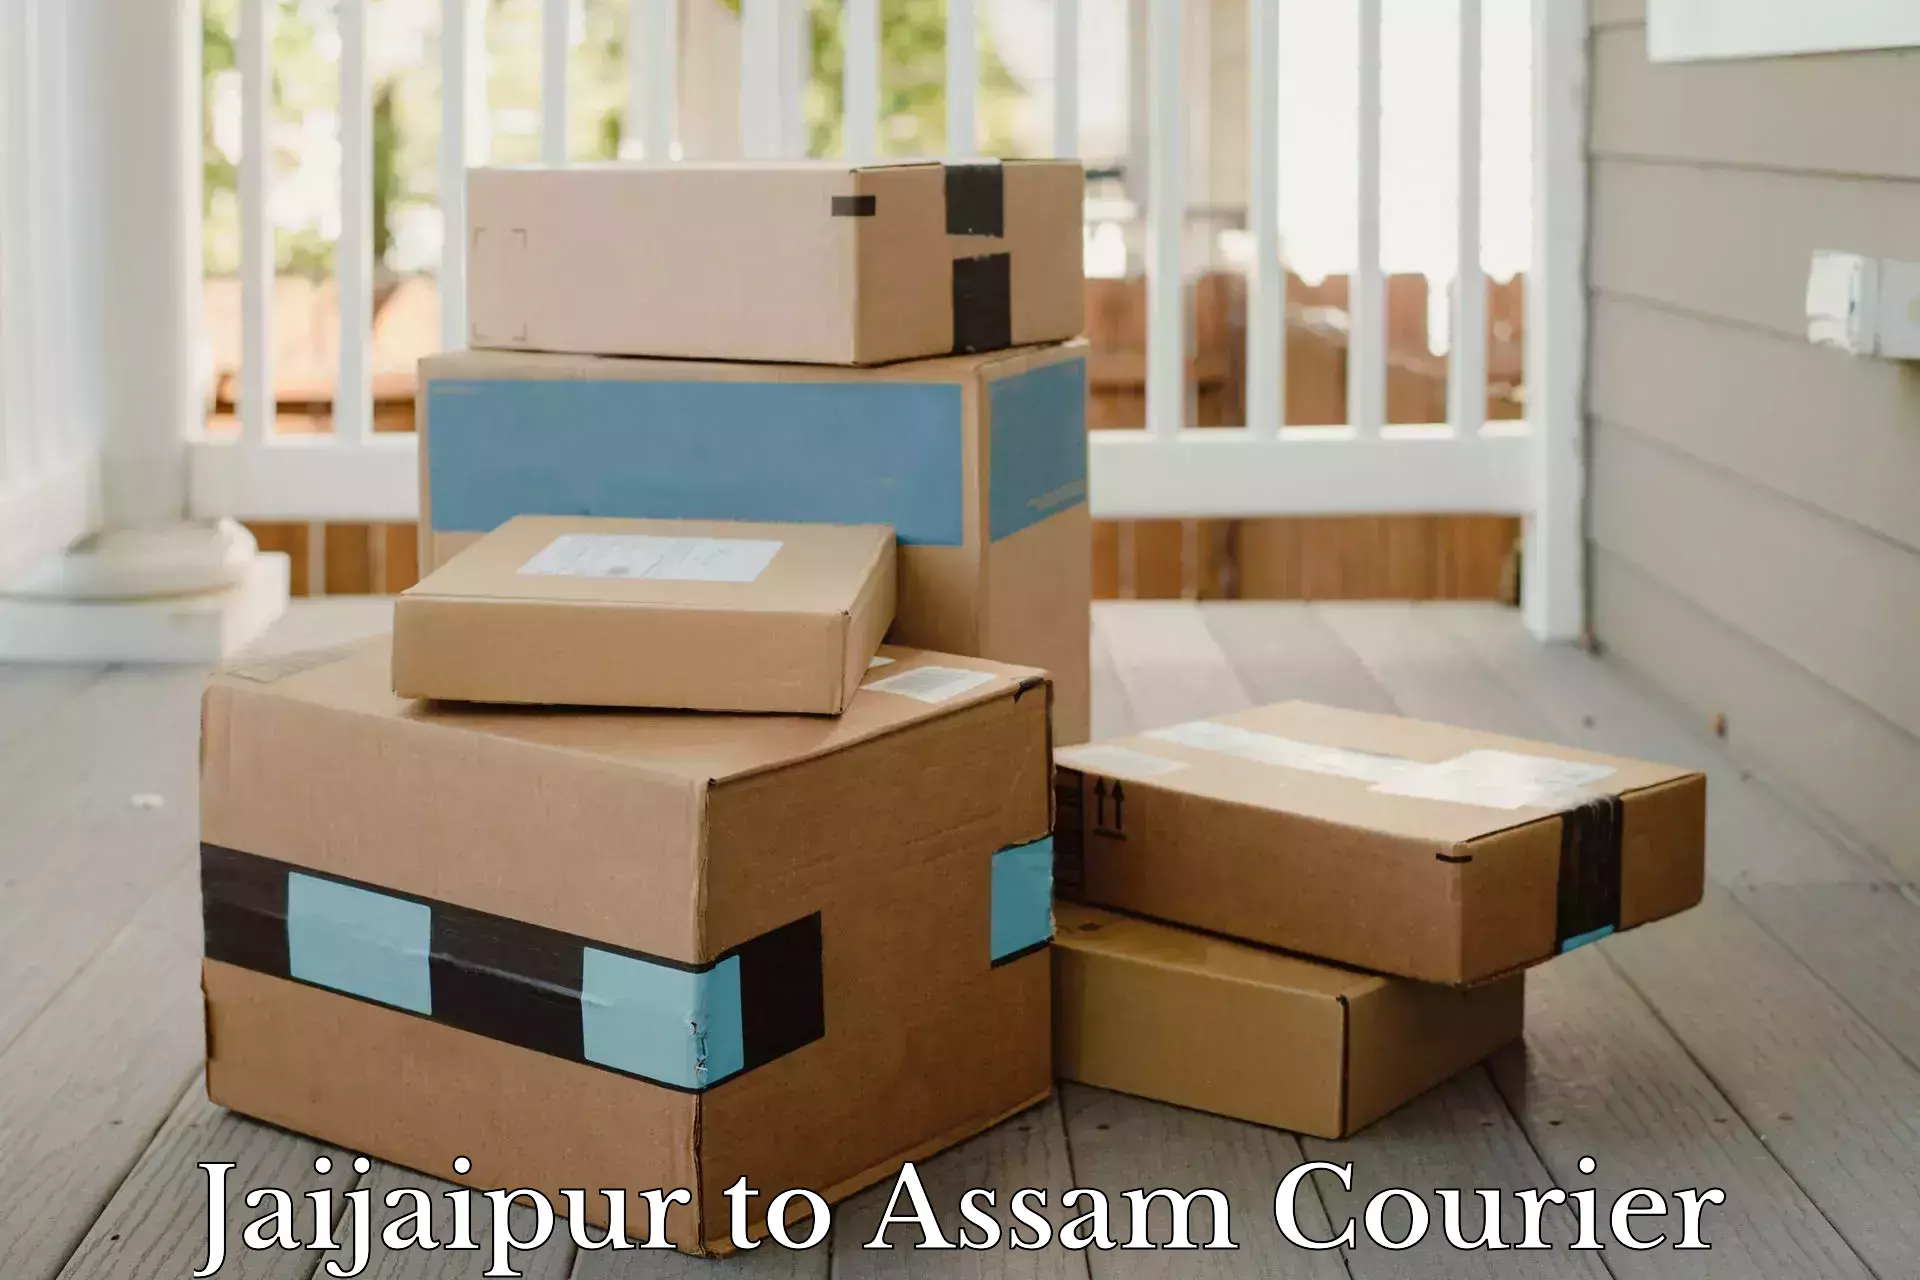 Same-day delivery options Jaijaipur to Hajo